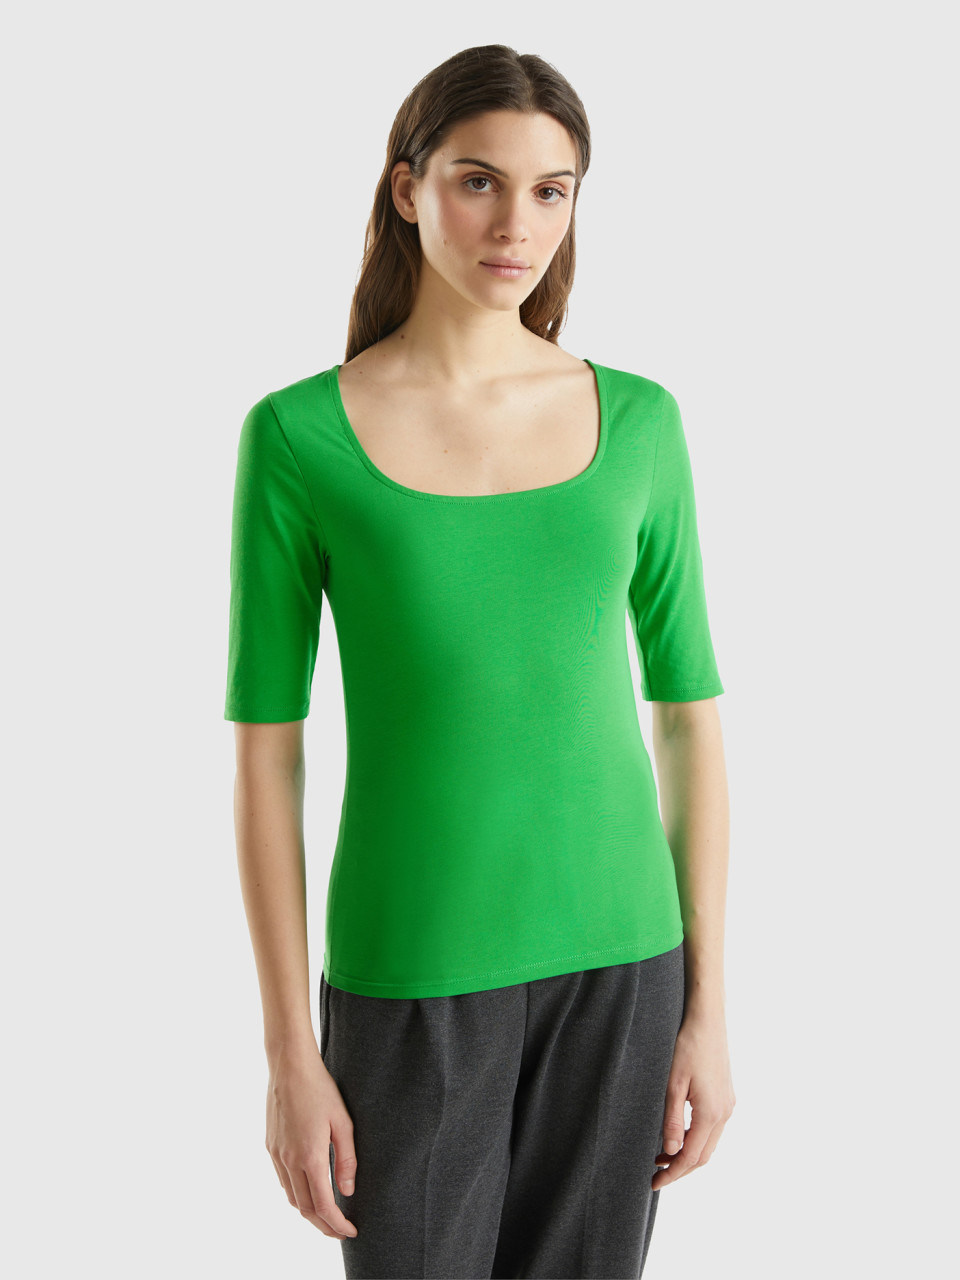 Benetton, Fitted Stretch Cotton T-shirt, Green, Women